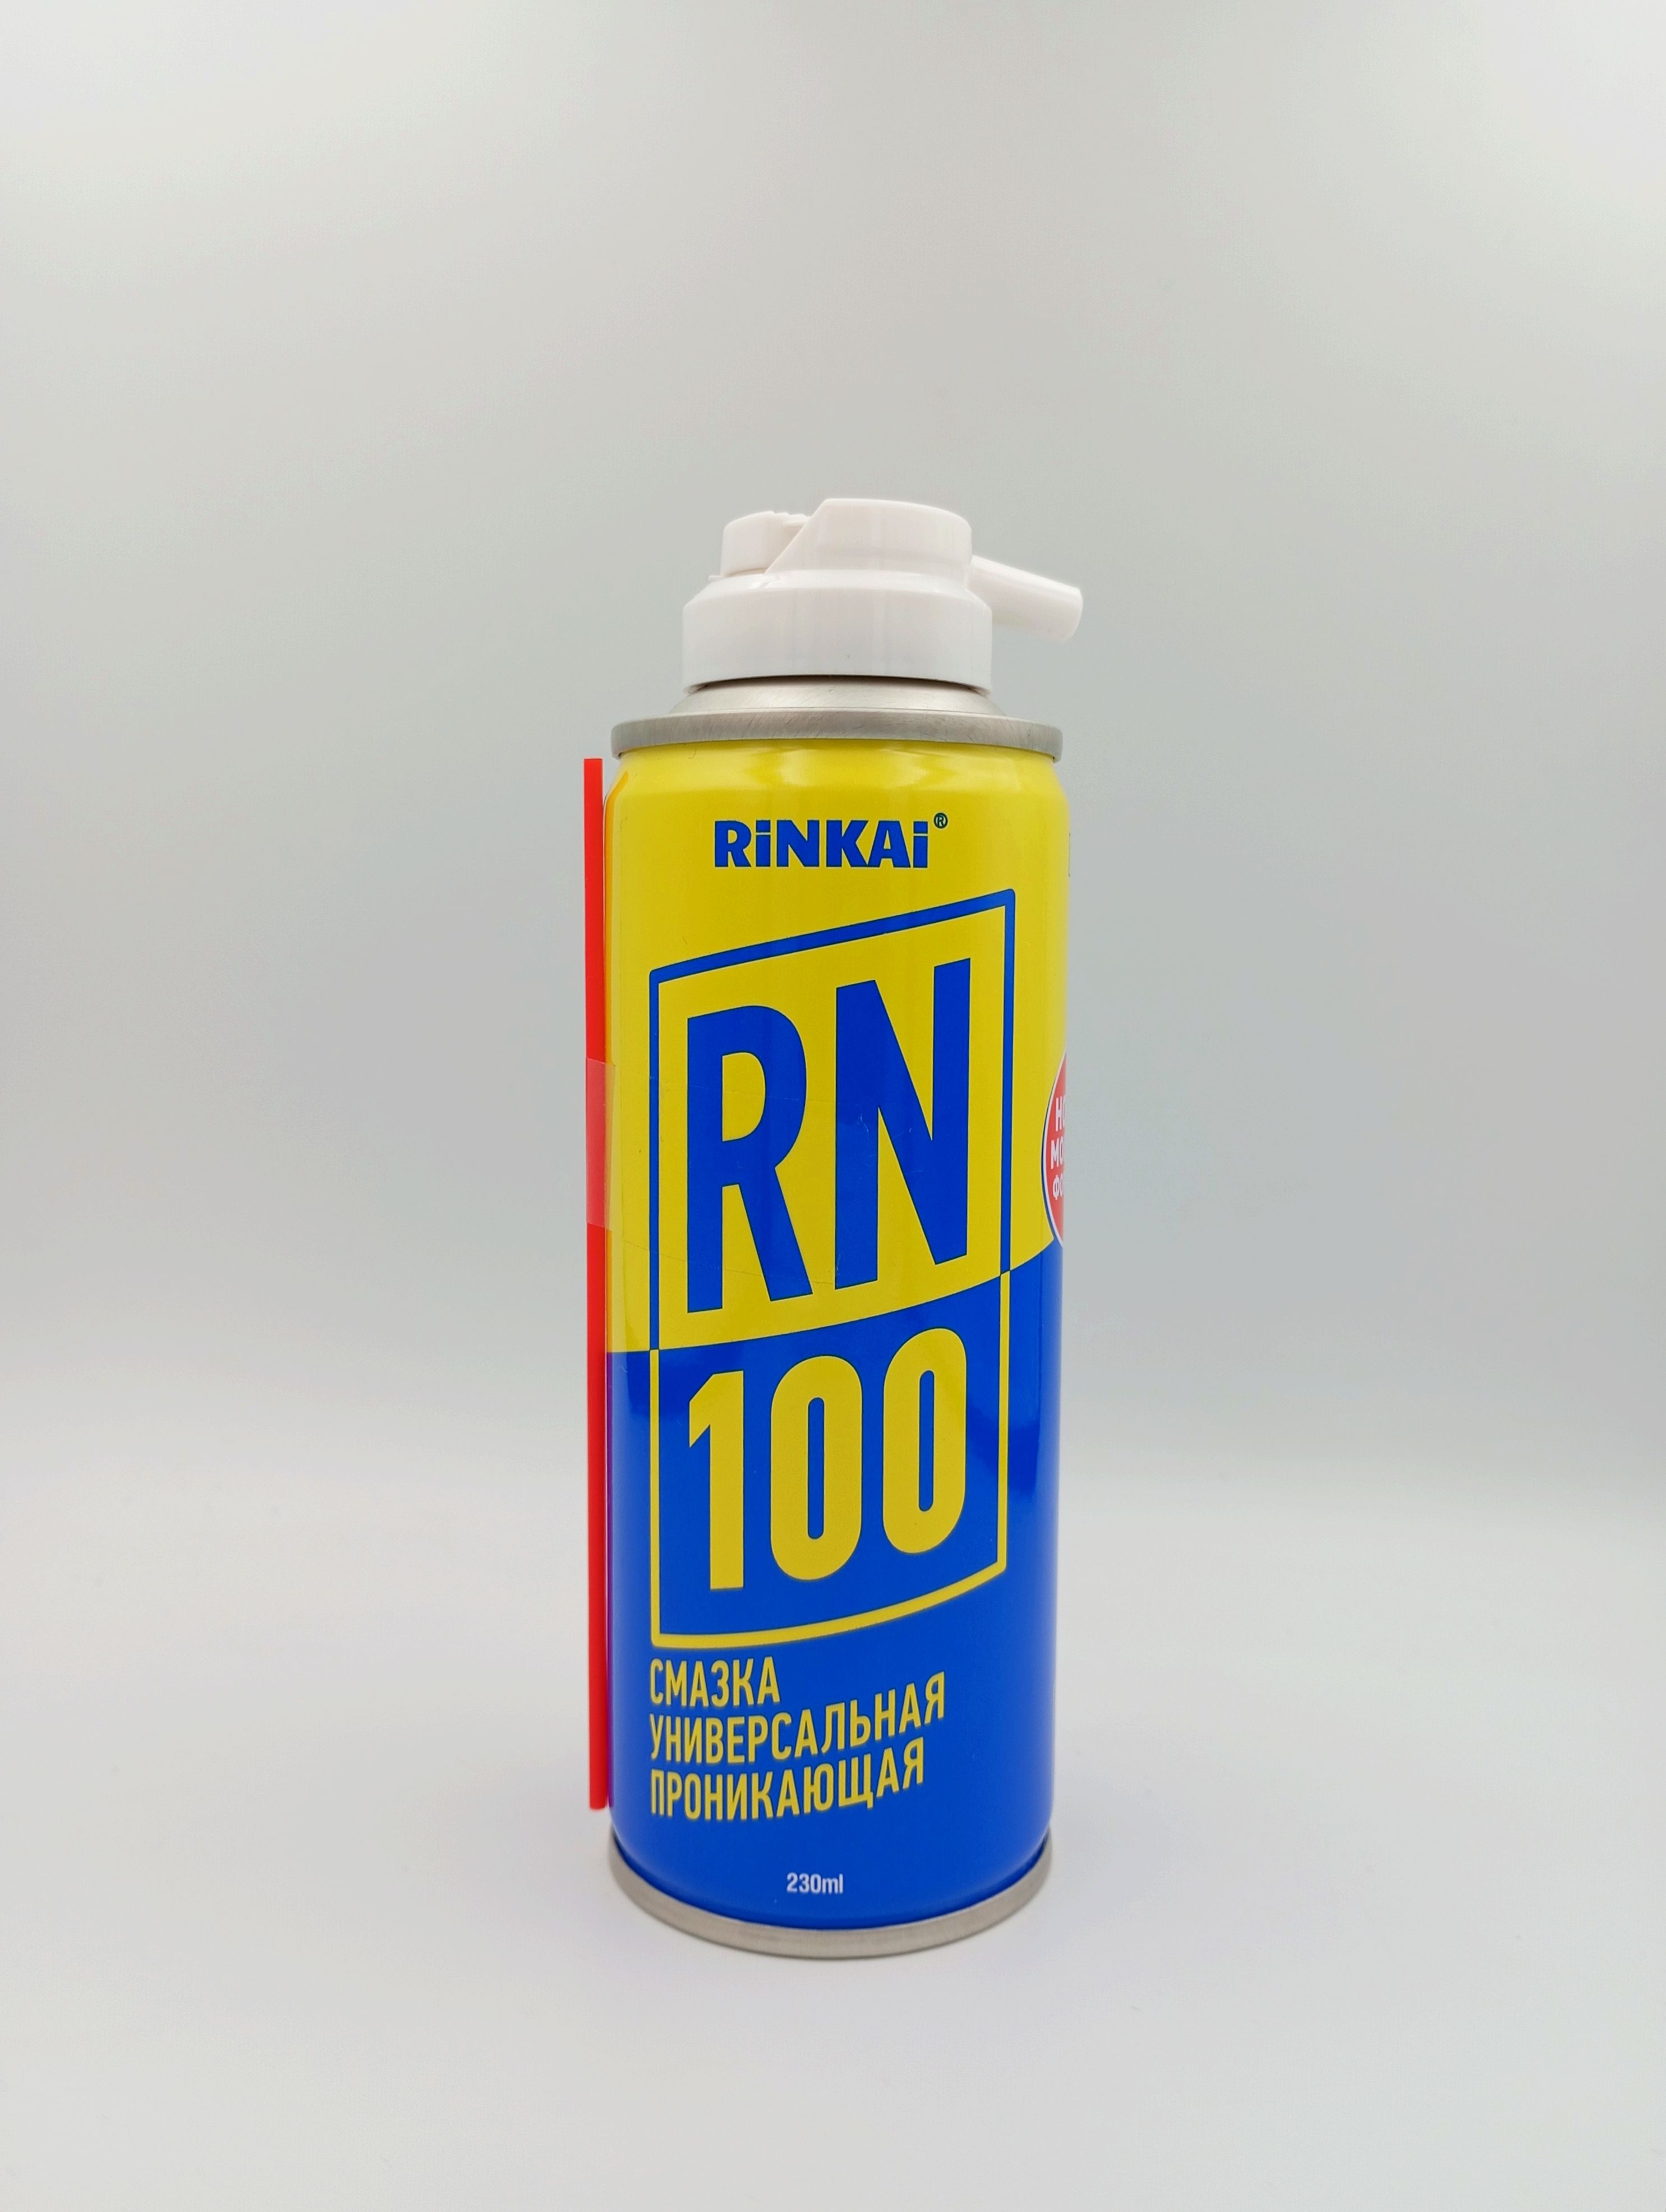 Rinkai RN100 Multipurpose Grease Универсальная проникающая смазка антикоррозийная 230 мл